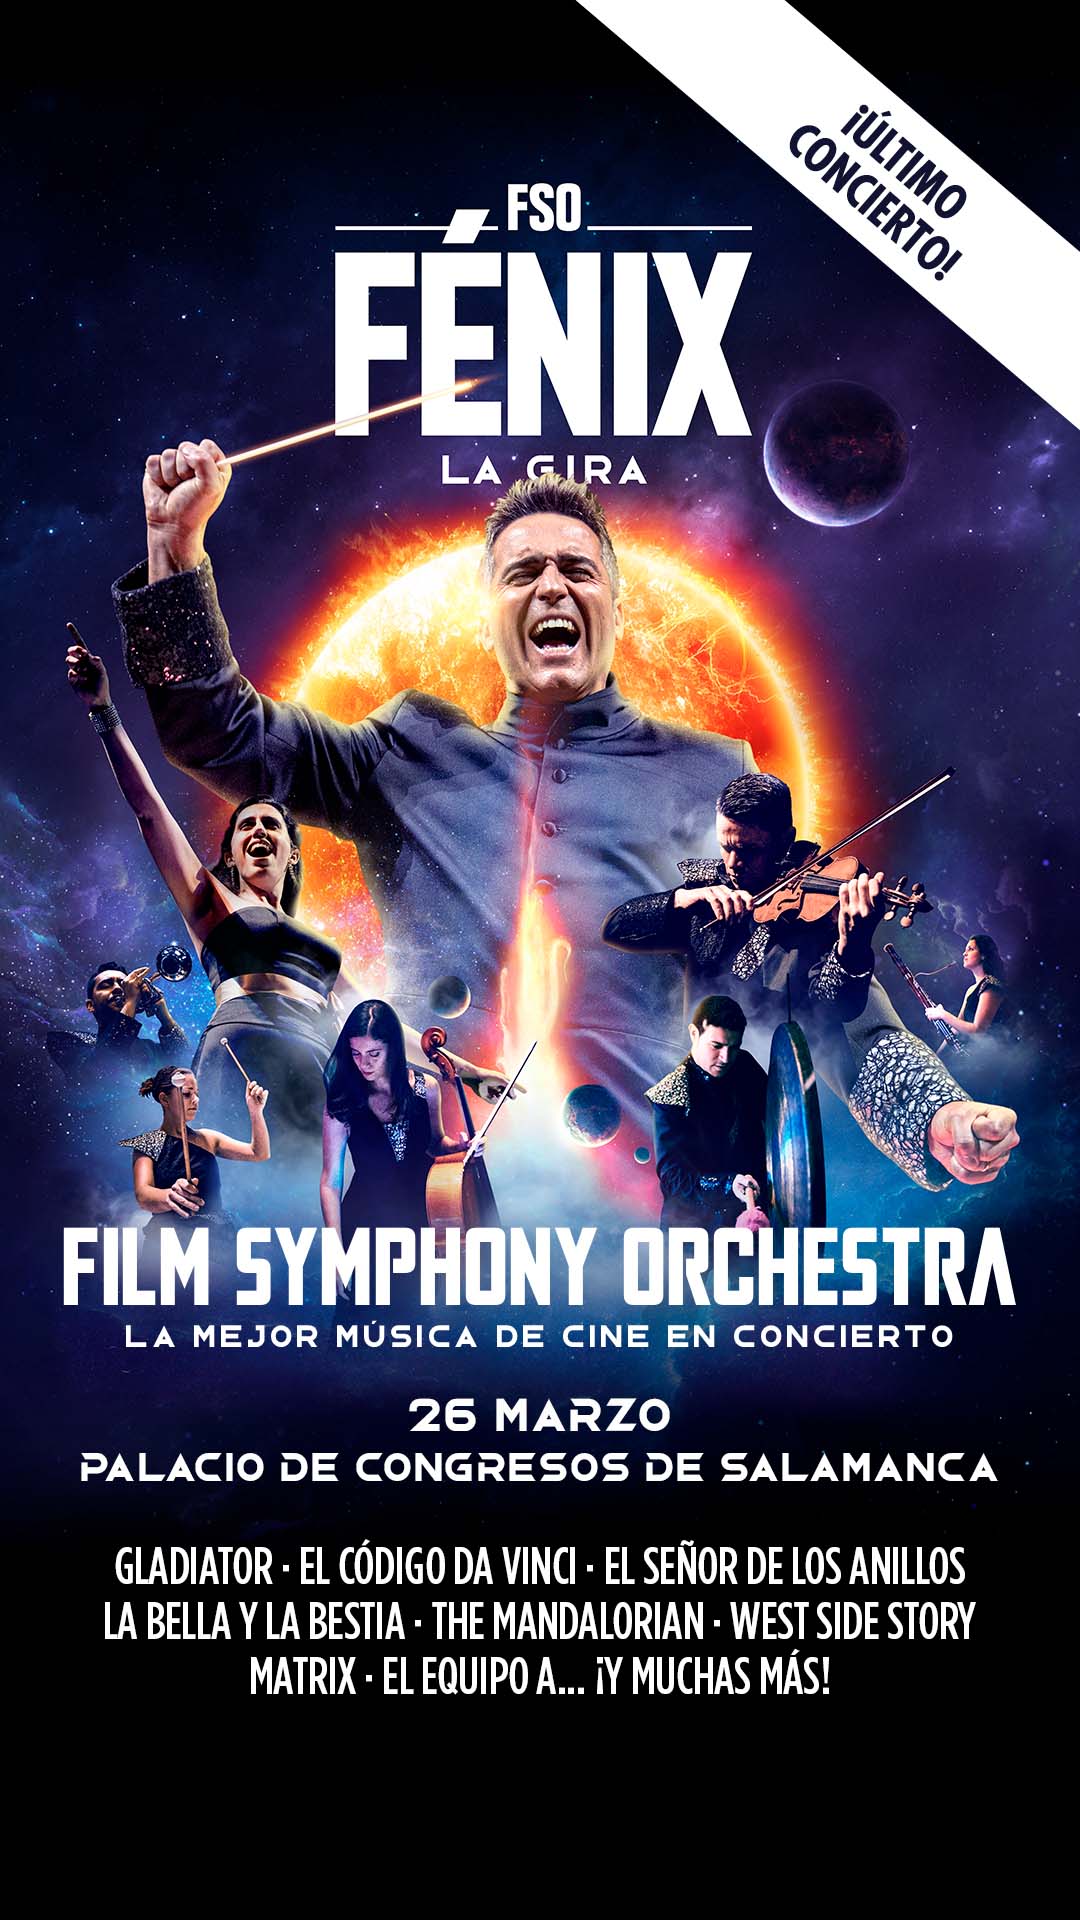 Fénix la Gira Film Symphony Orchestra 26 marzo 2022 Palacio de Congresos de Salamanca